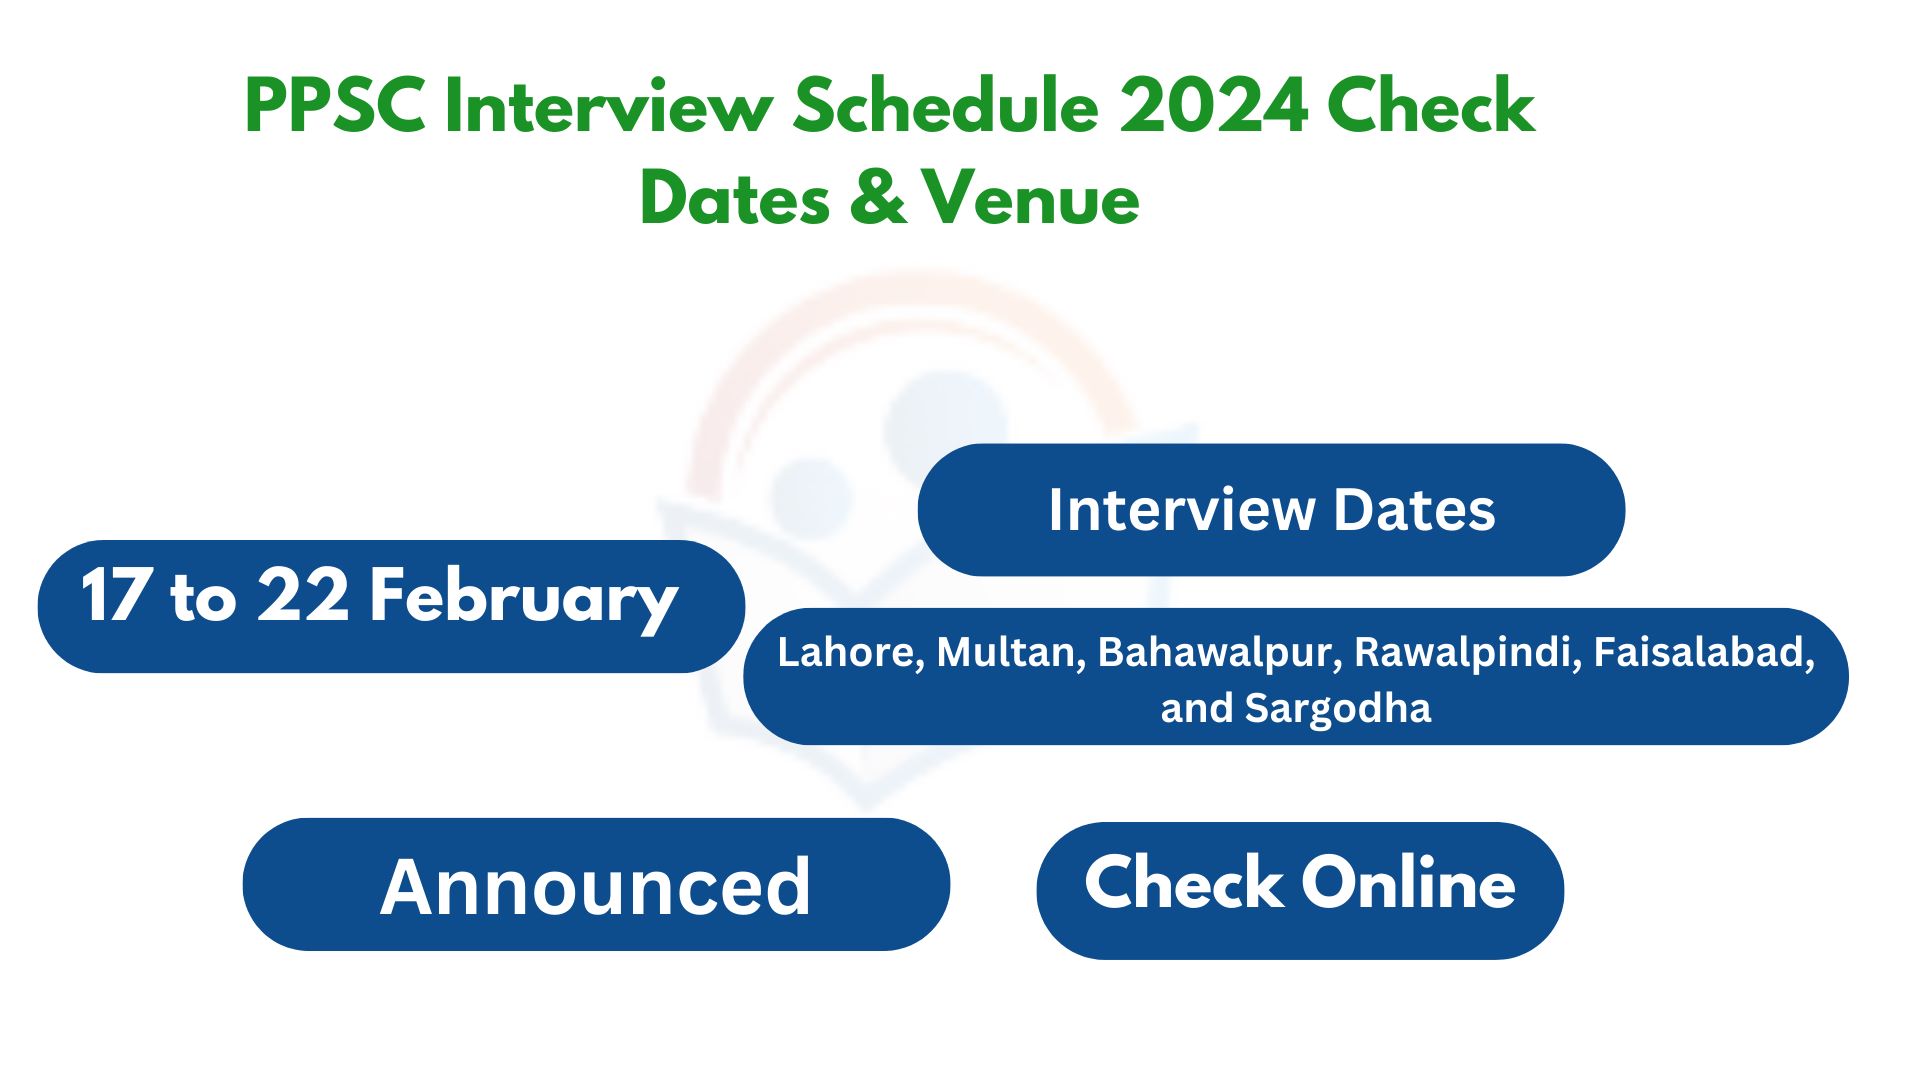 PPSC Interview Schedule 2024 Check Dates & Venue